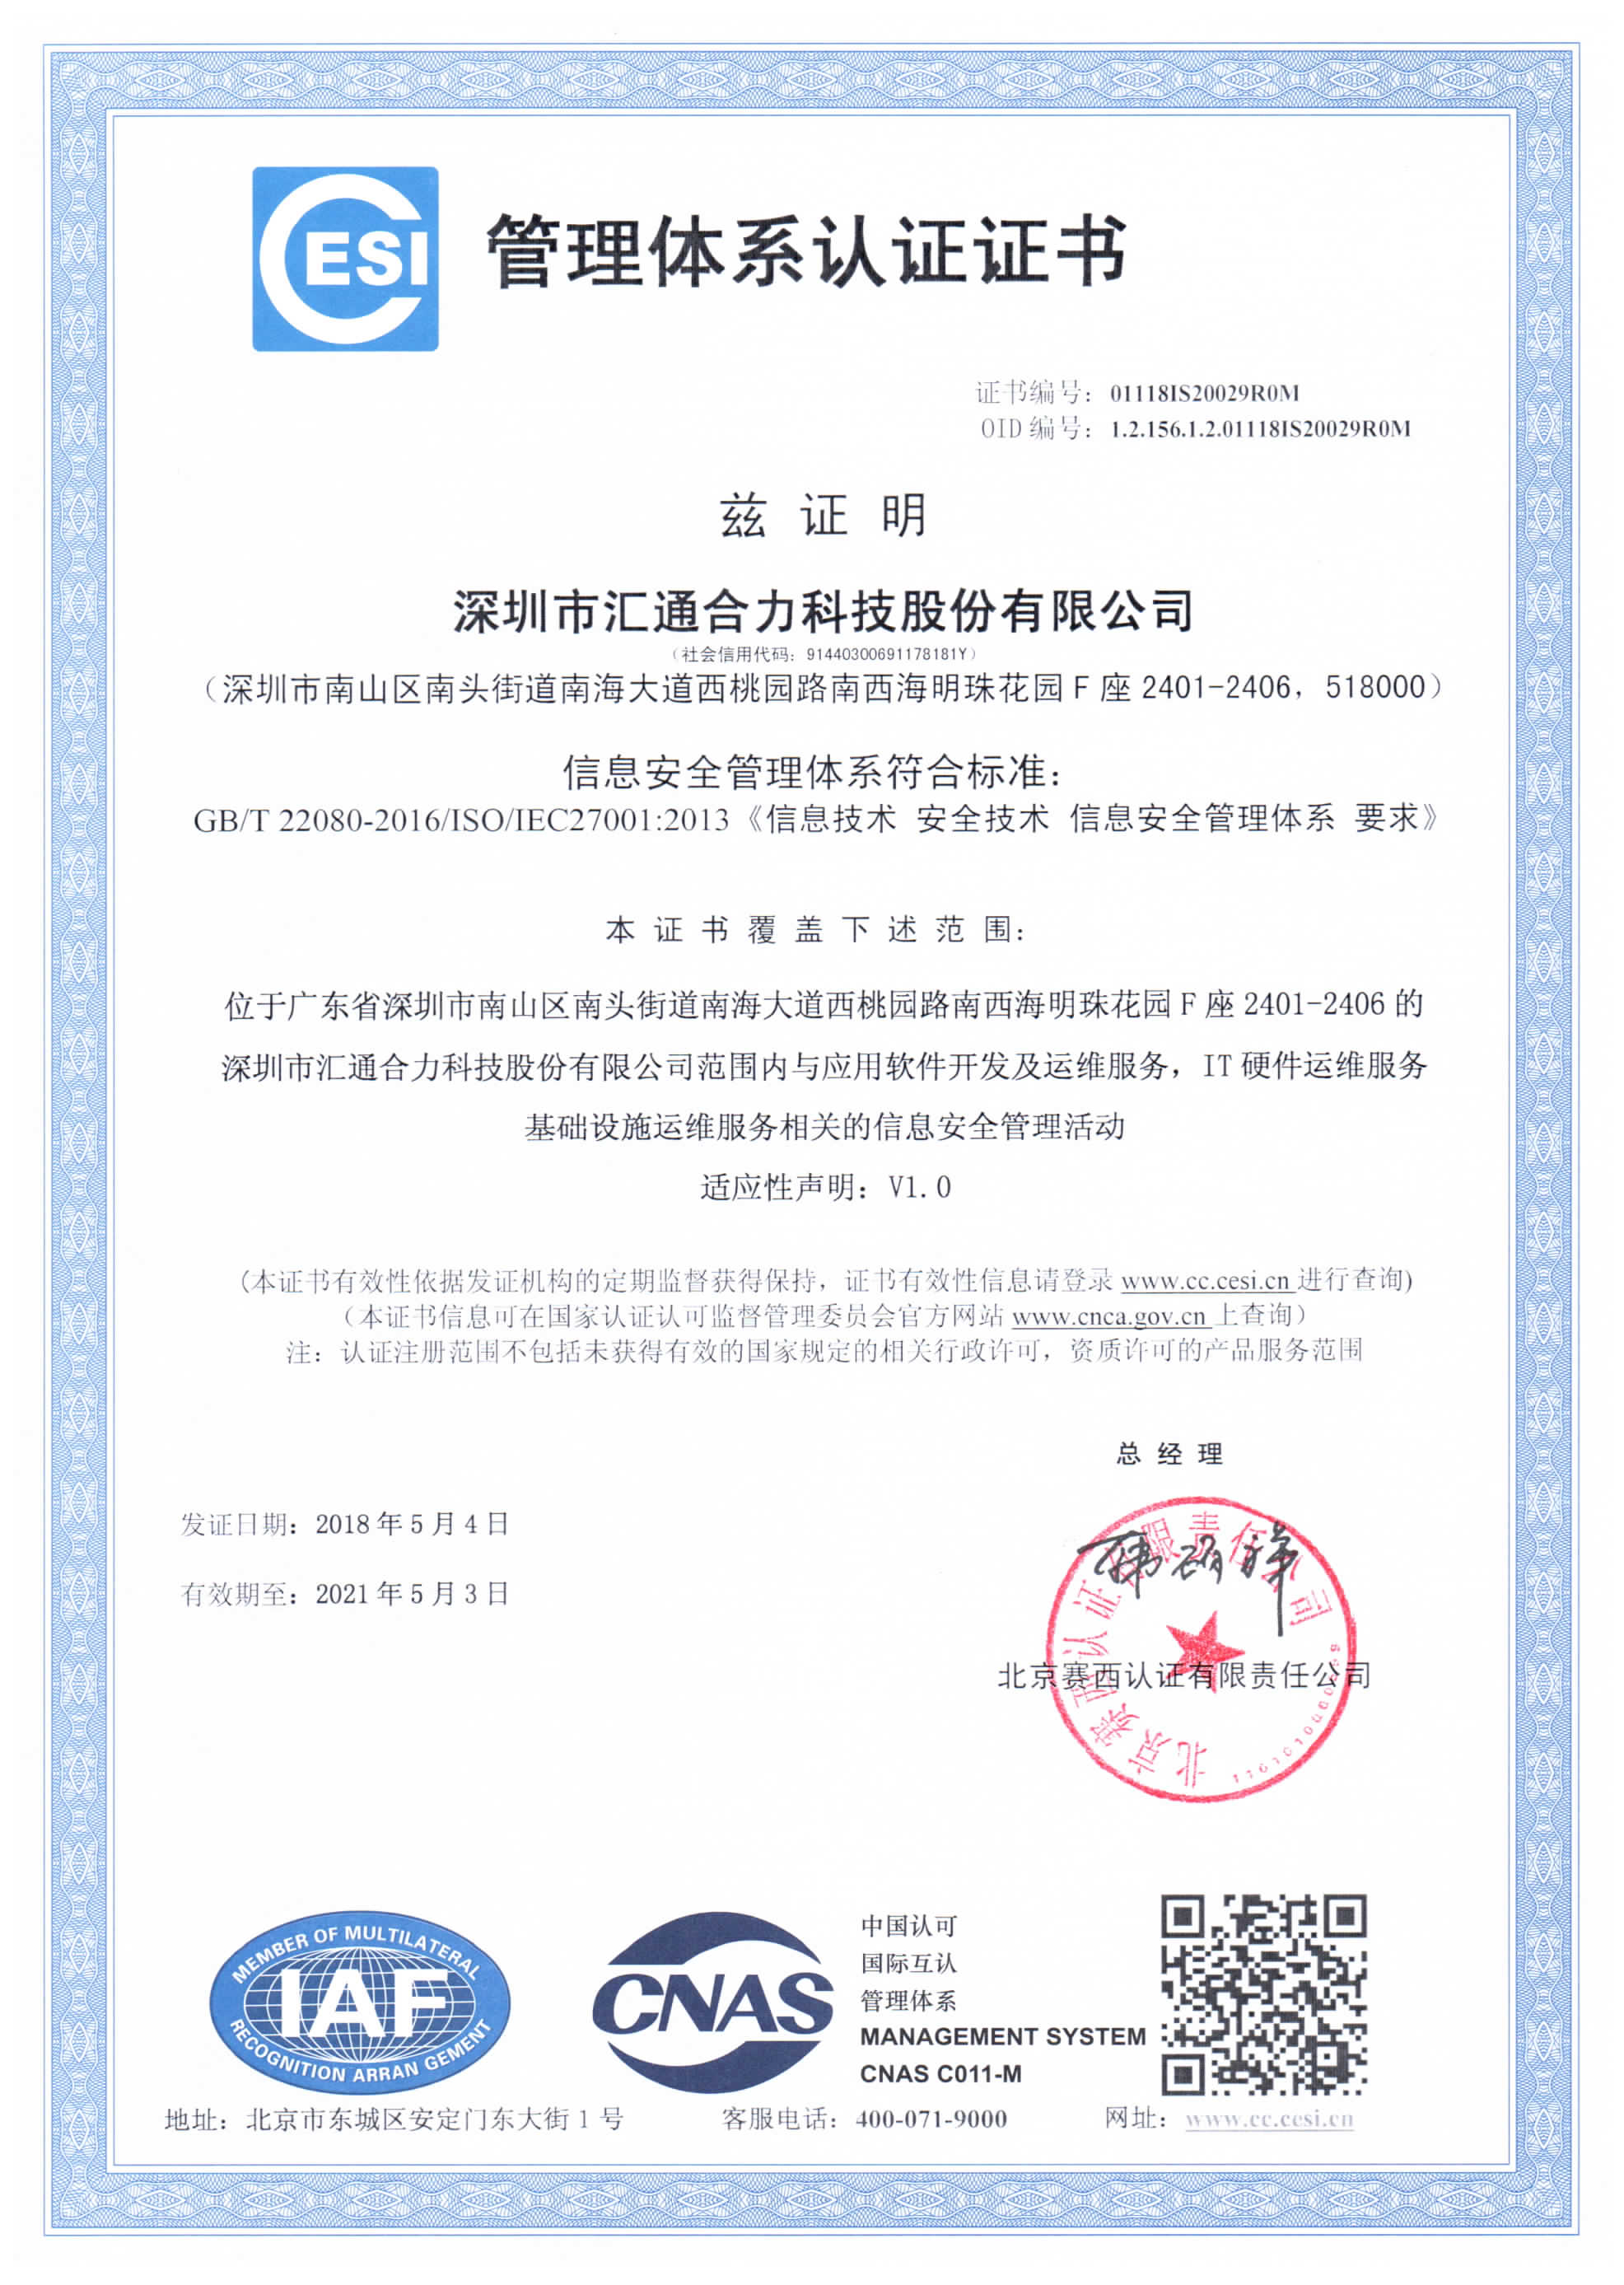 ISO27001 信息安全管理體系認證證書